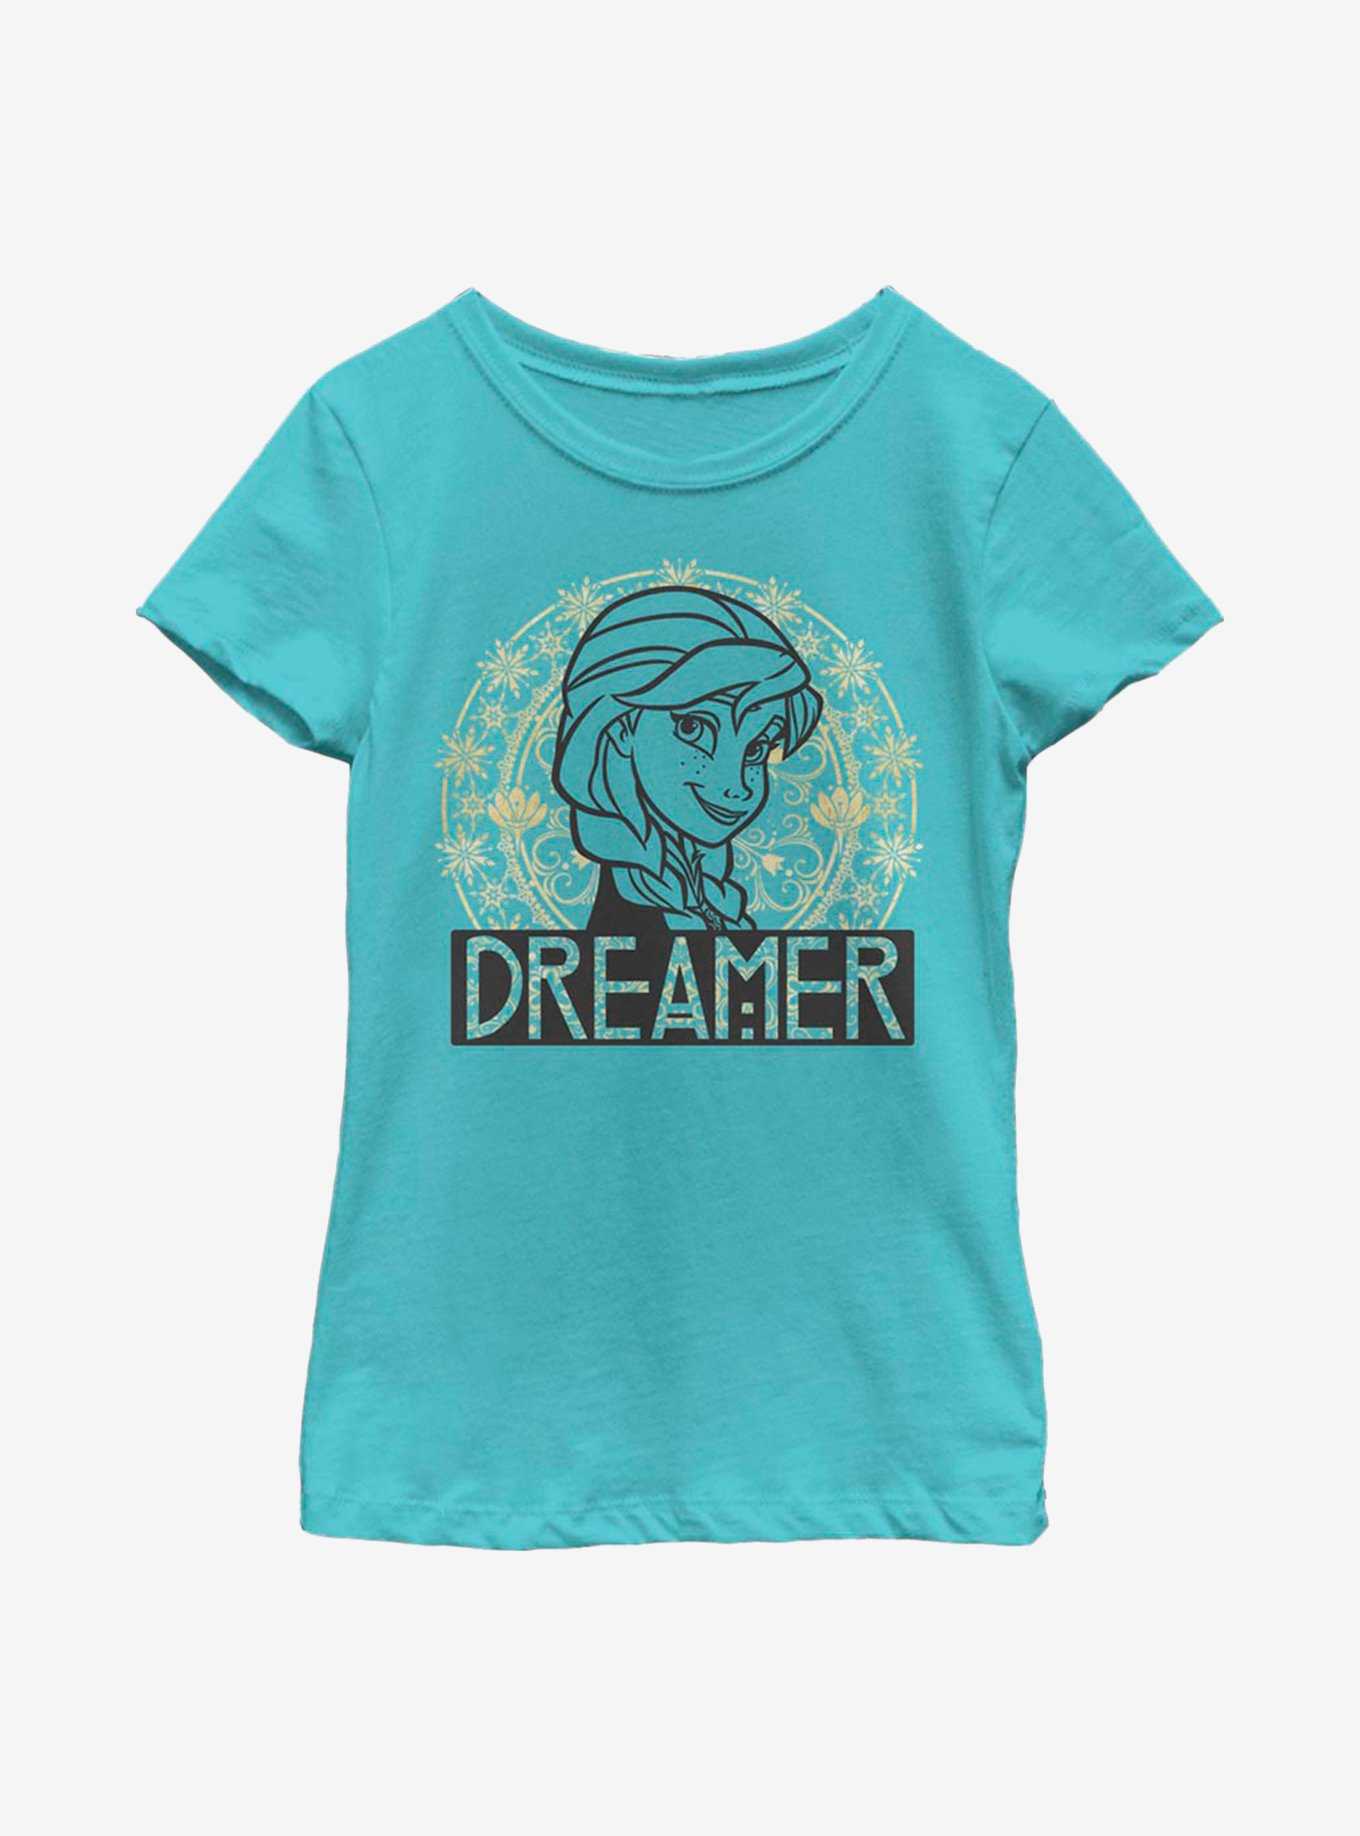 Disney Frozen Dreaming Anna Youth Girls T-Shirt, , hi-res